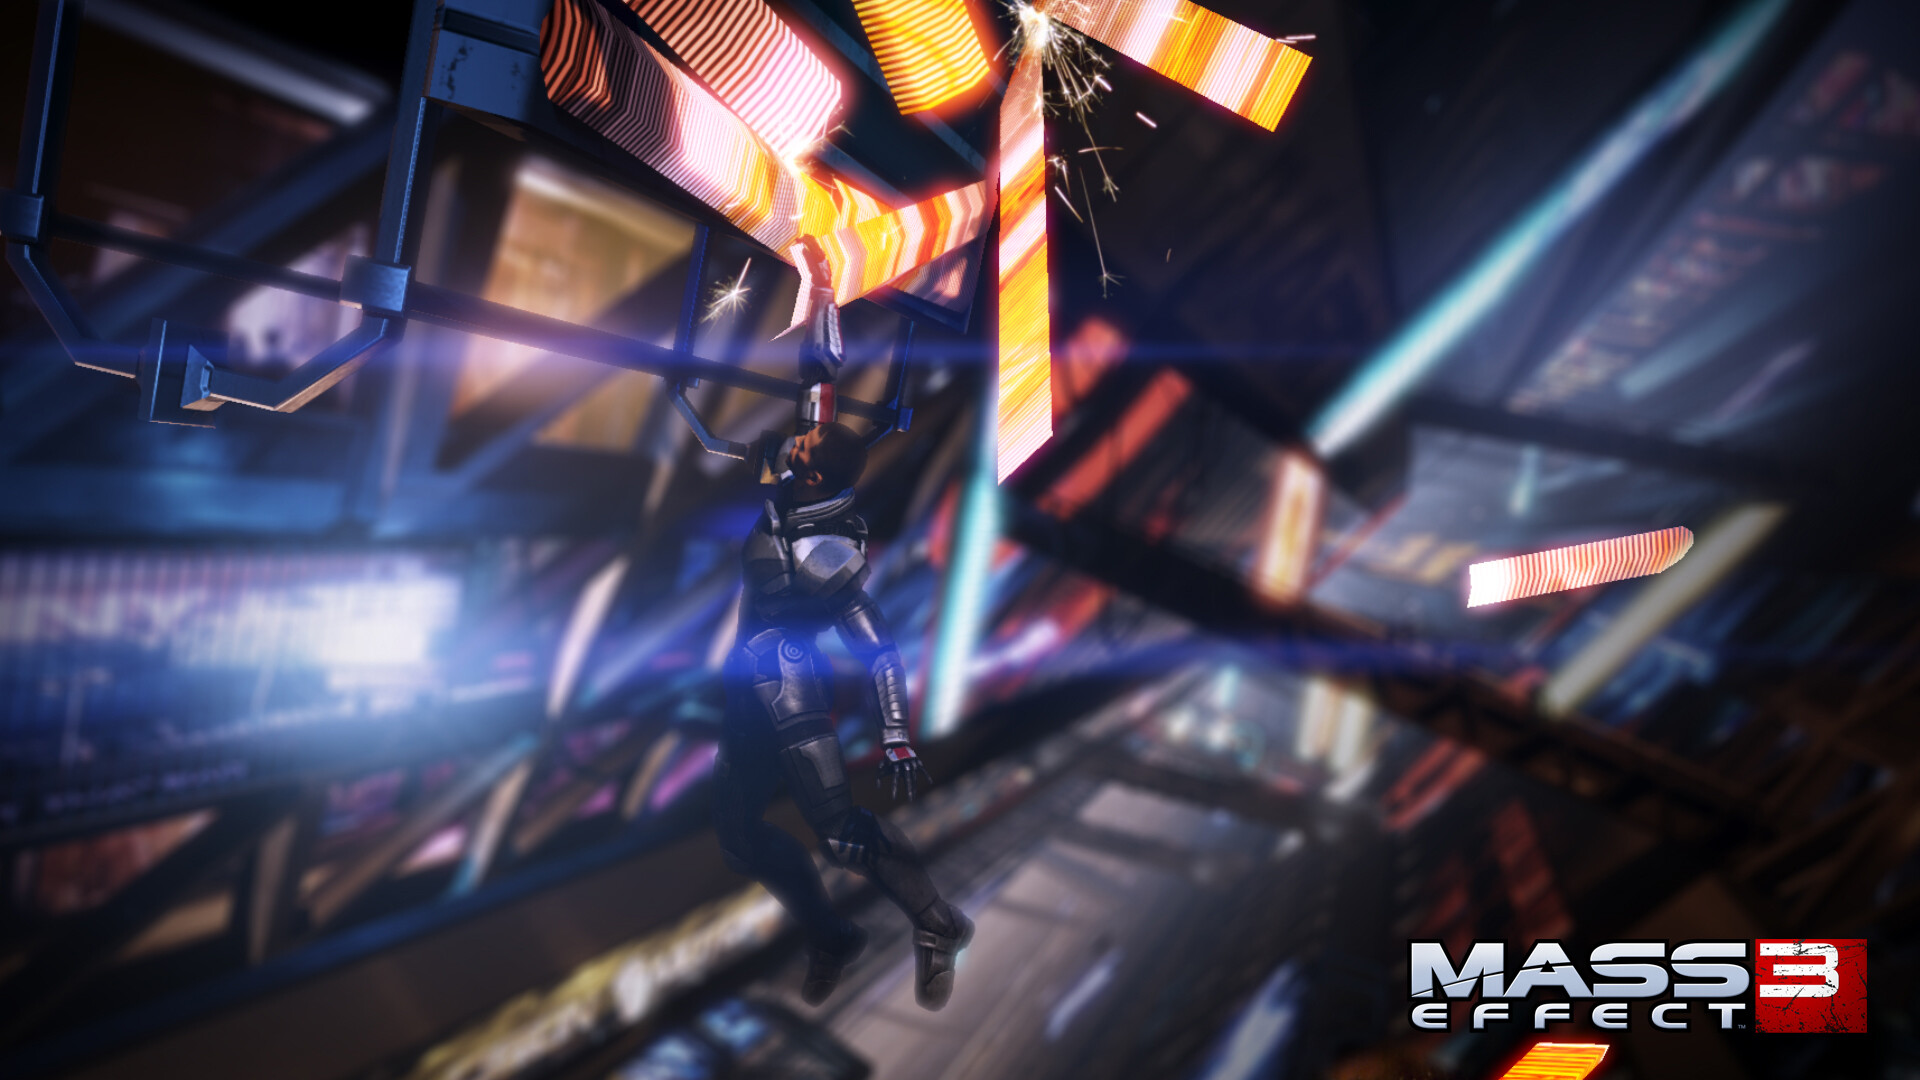 质量效应3 数字豪华版/Mass Effect™3N7配图5